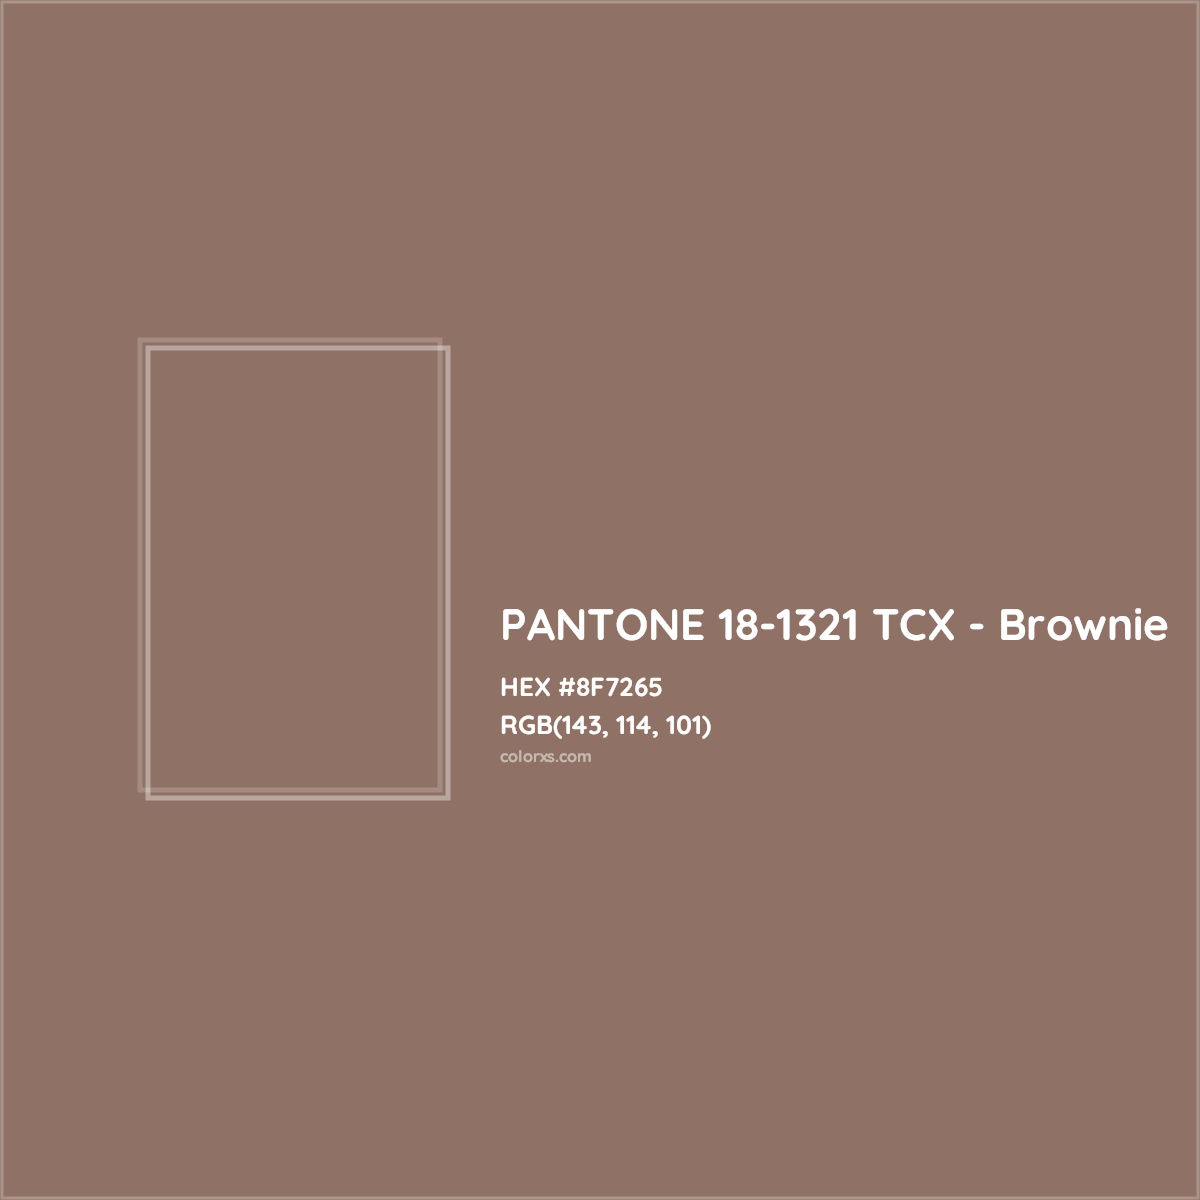 HEX #8F7265 PANTONE 18-1321 TCX - Brownie CMS Pantone TCX - Color Code